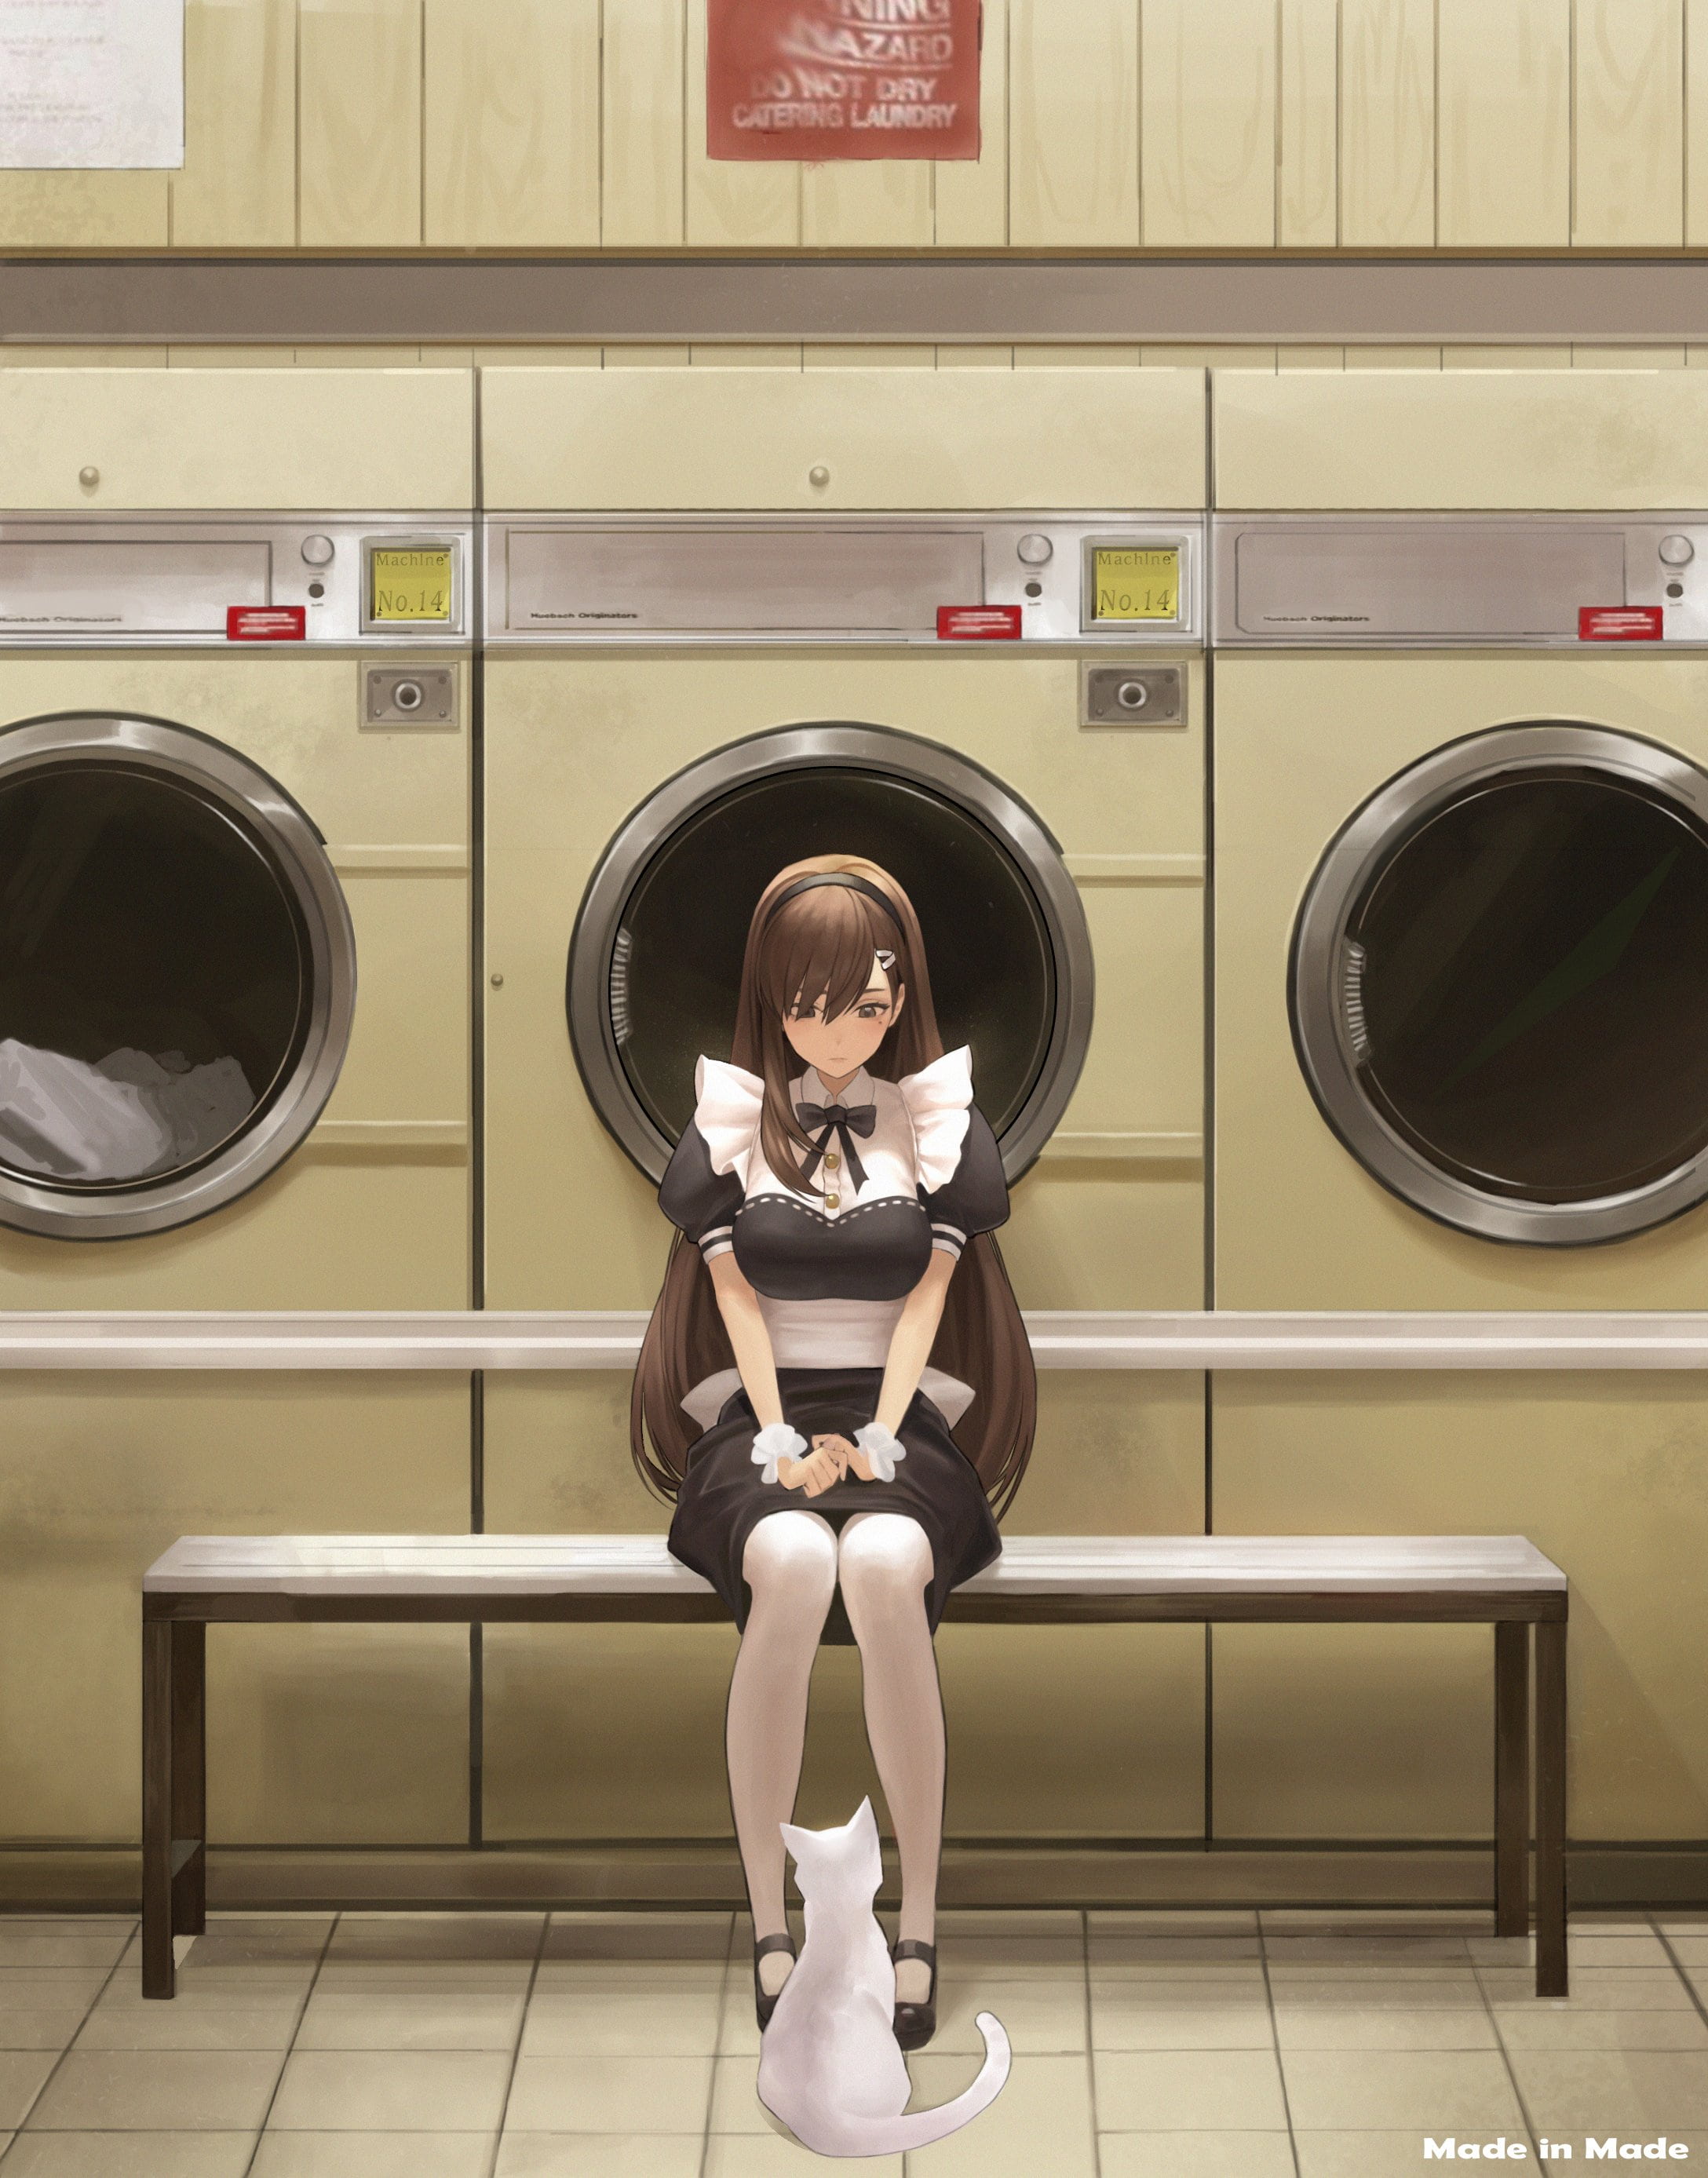 Anime Anime Girls Original Characters Laundromat Cats 2176x2775